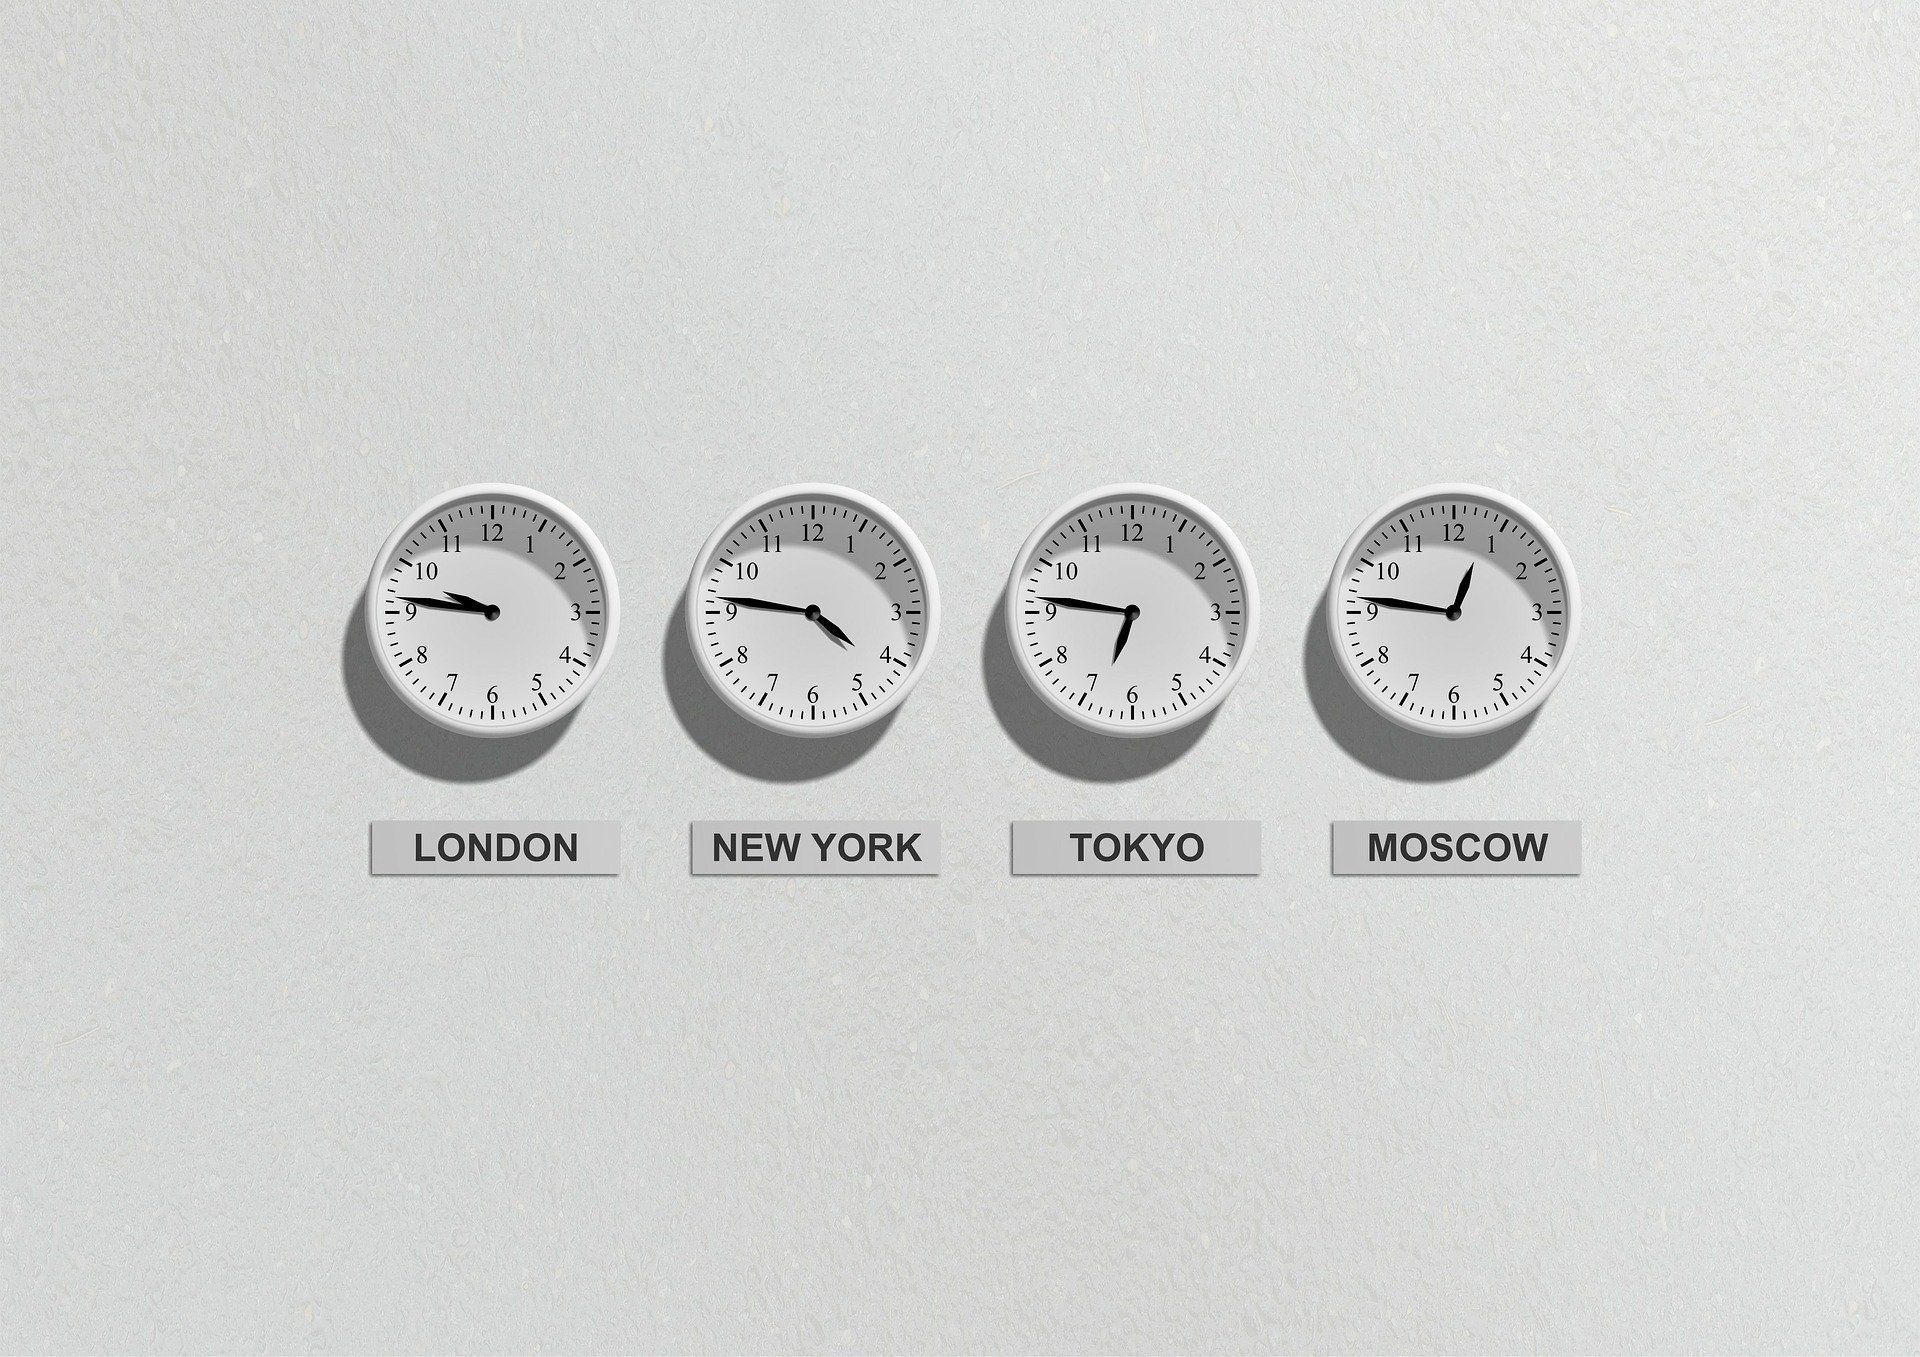 Photo of clocks set to different timezones